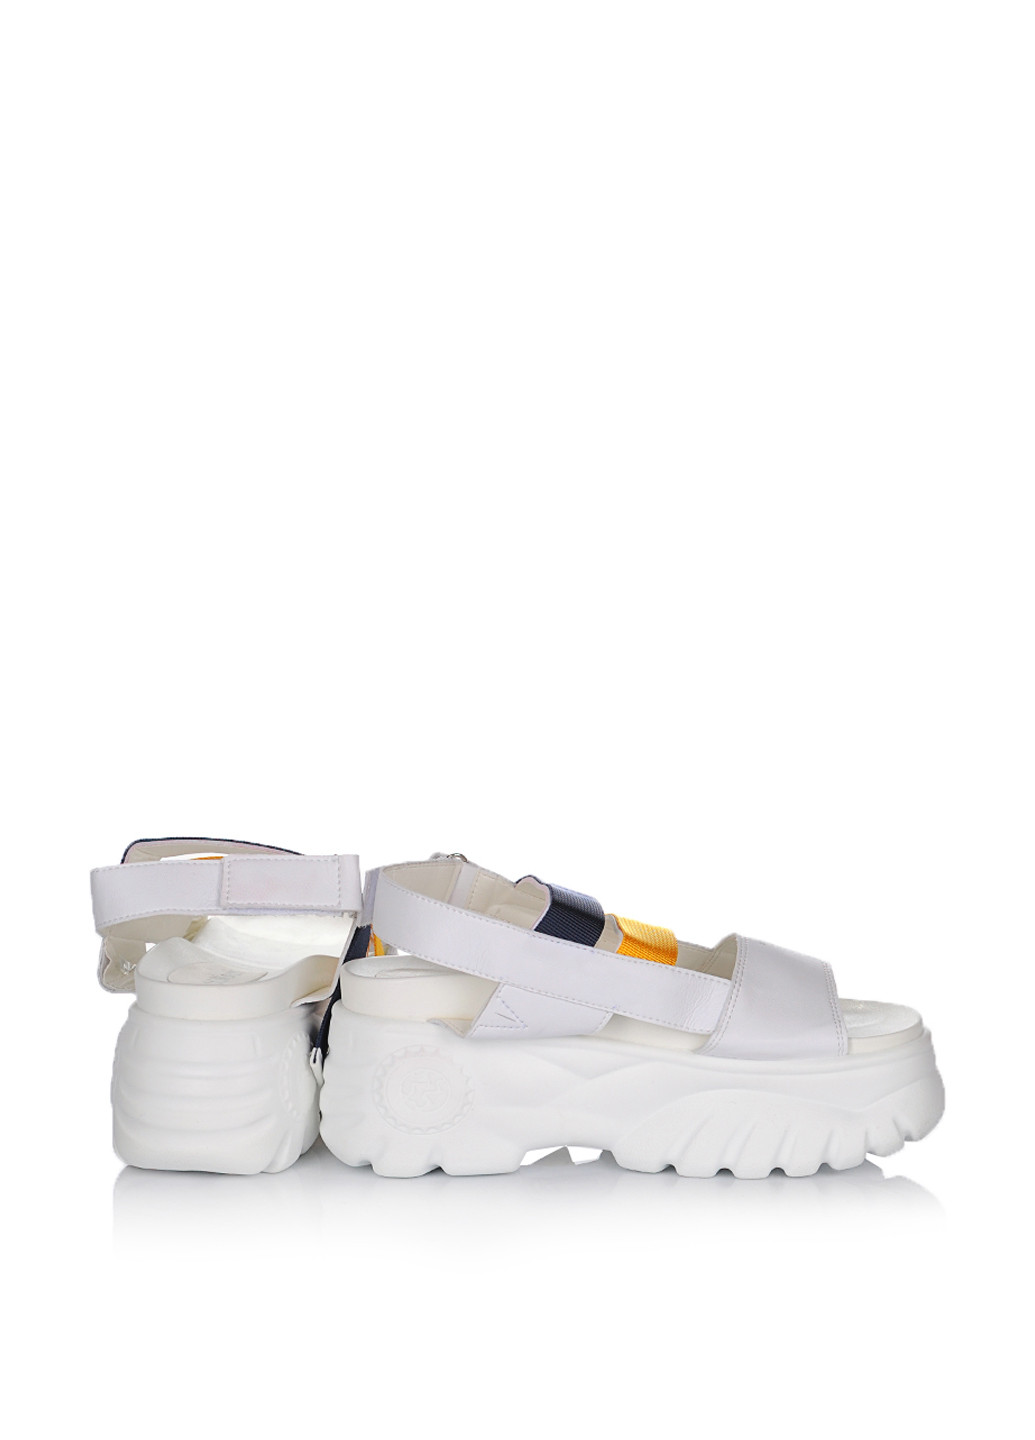 Белые босоножки Lilin Shoes на липучке с белой подошвой